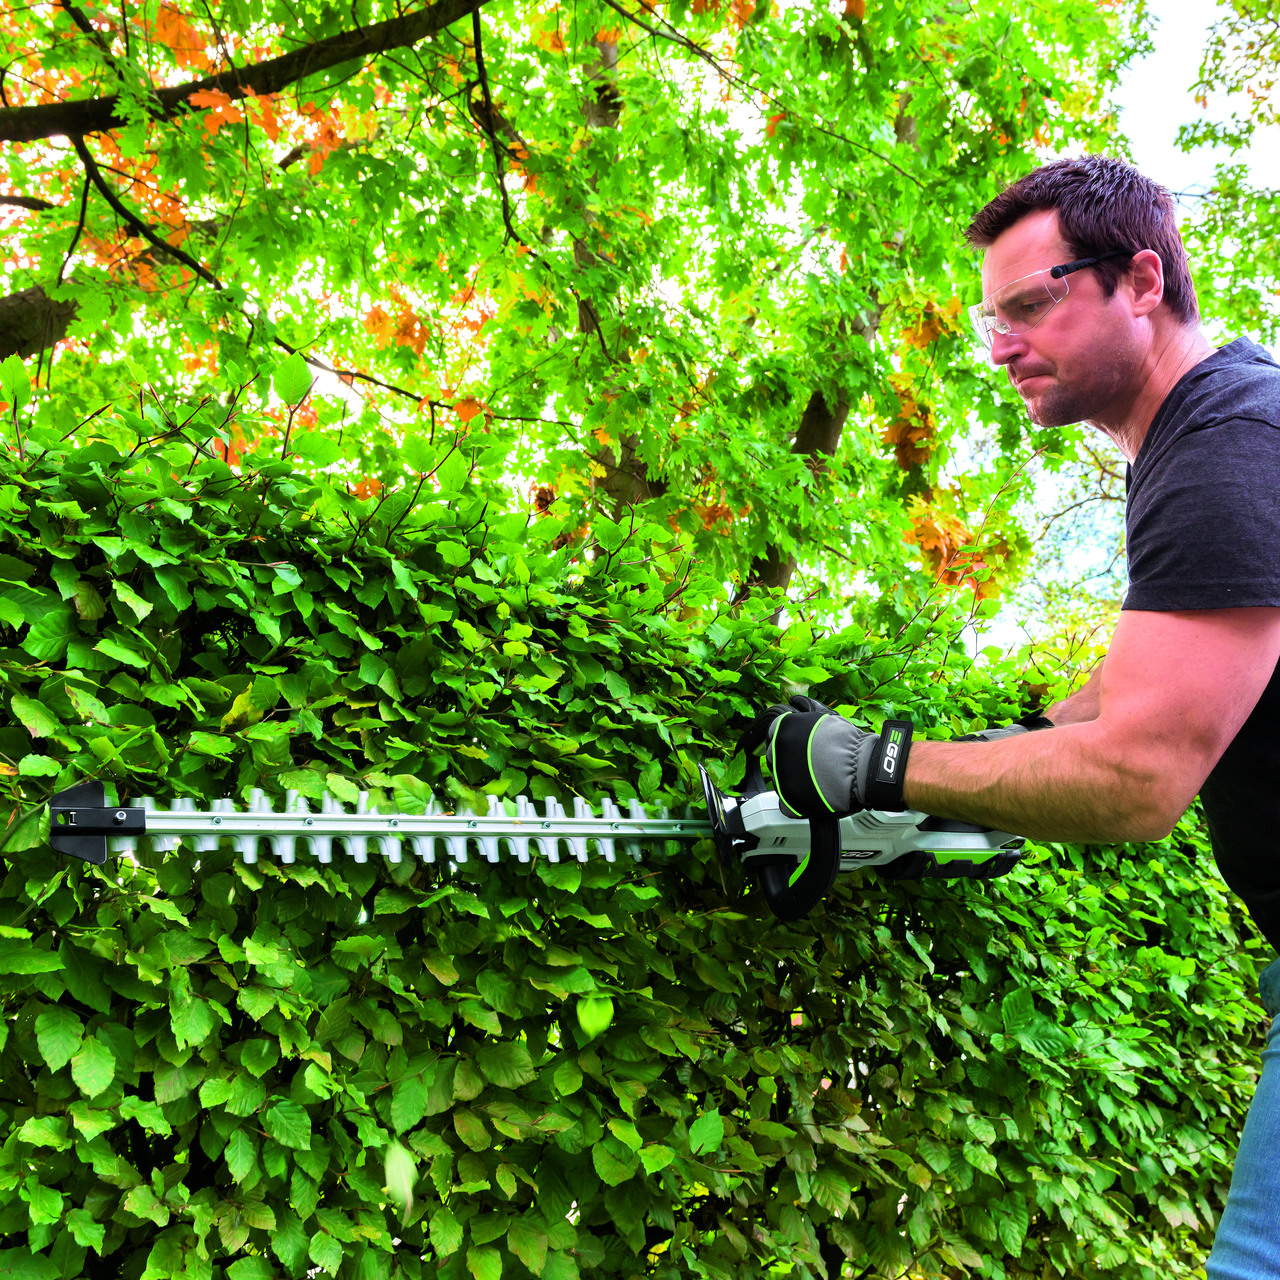 Man uses EGO hedge trimmer